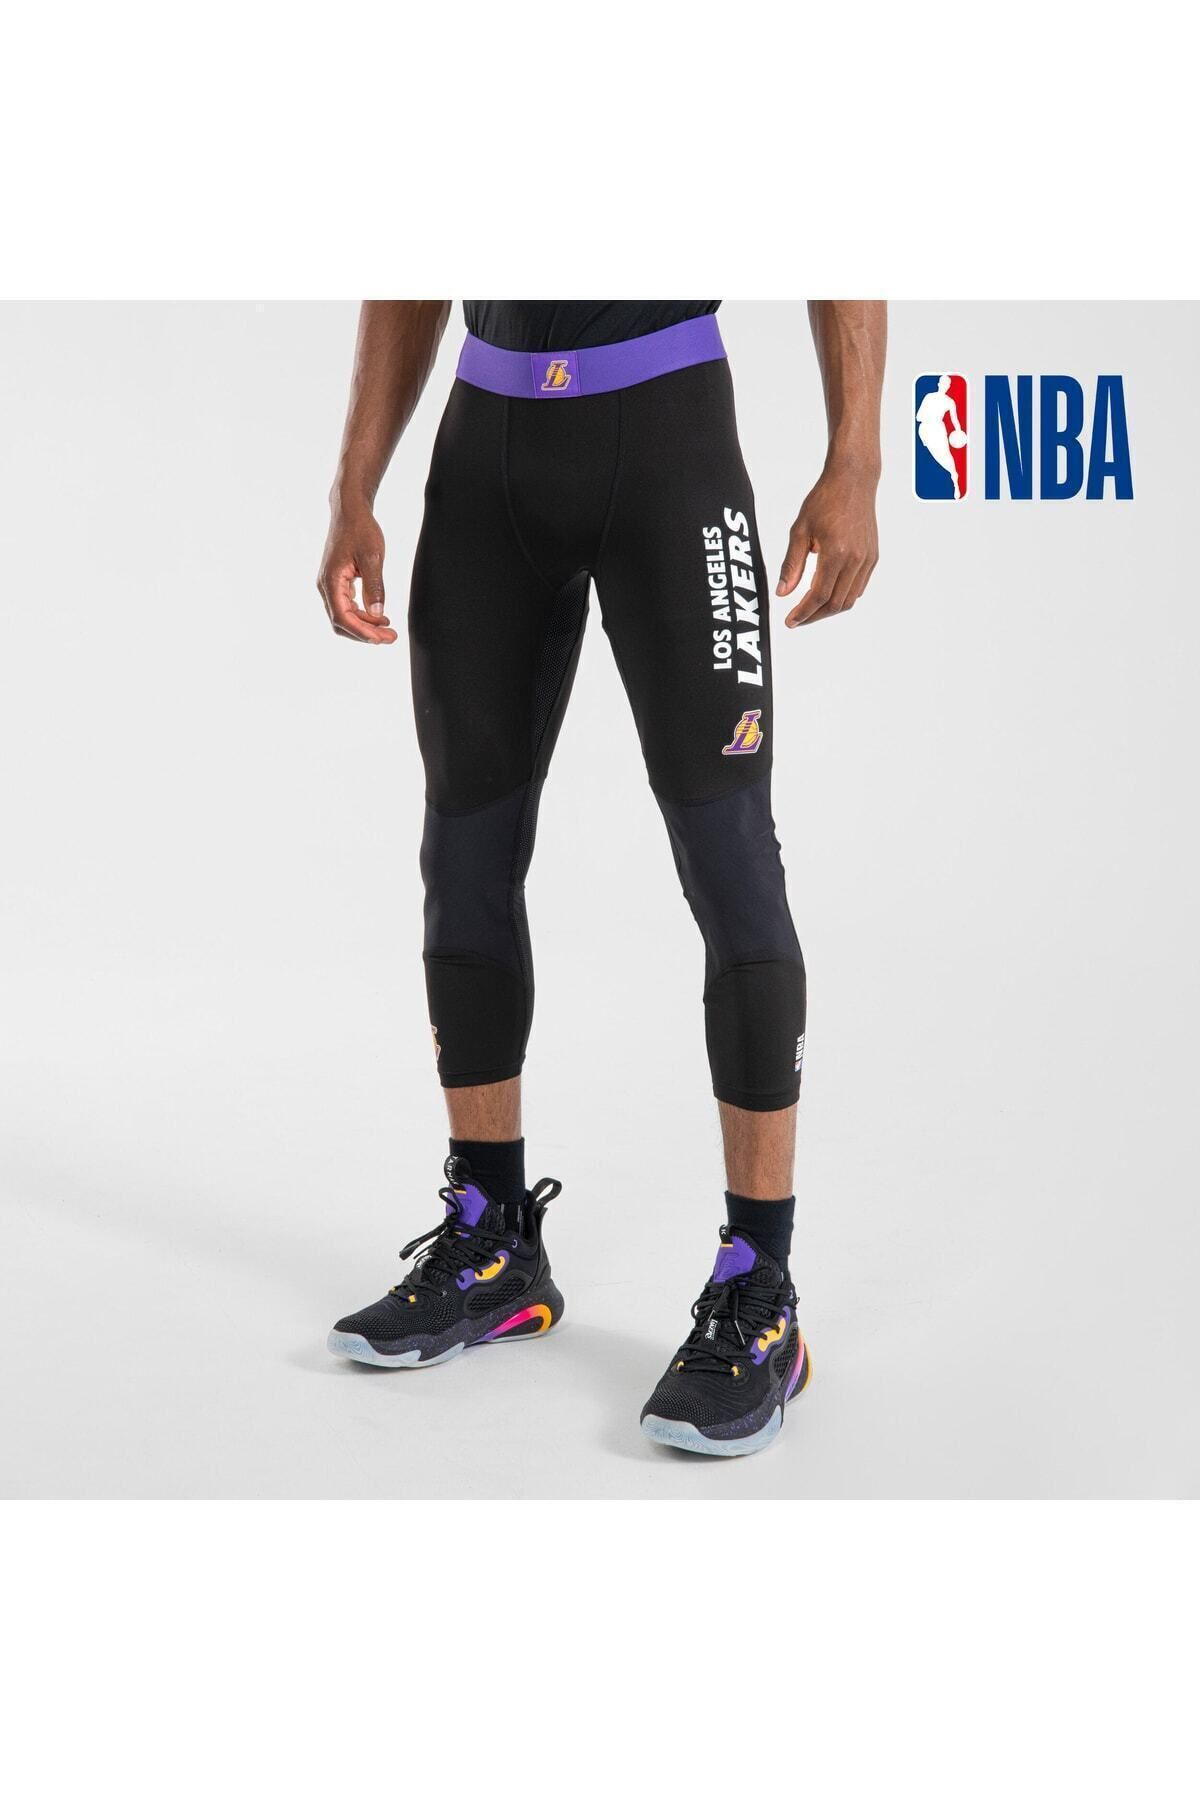 Decathlon Tarmak Nba Los Angeles Lakers Adult 3/4 Basketball Tights - Black  - 500 - Trendyol